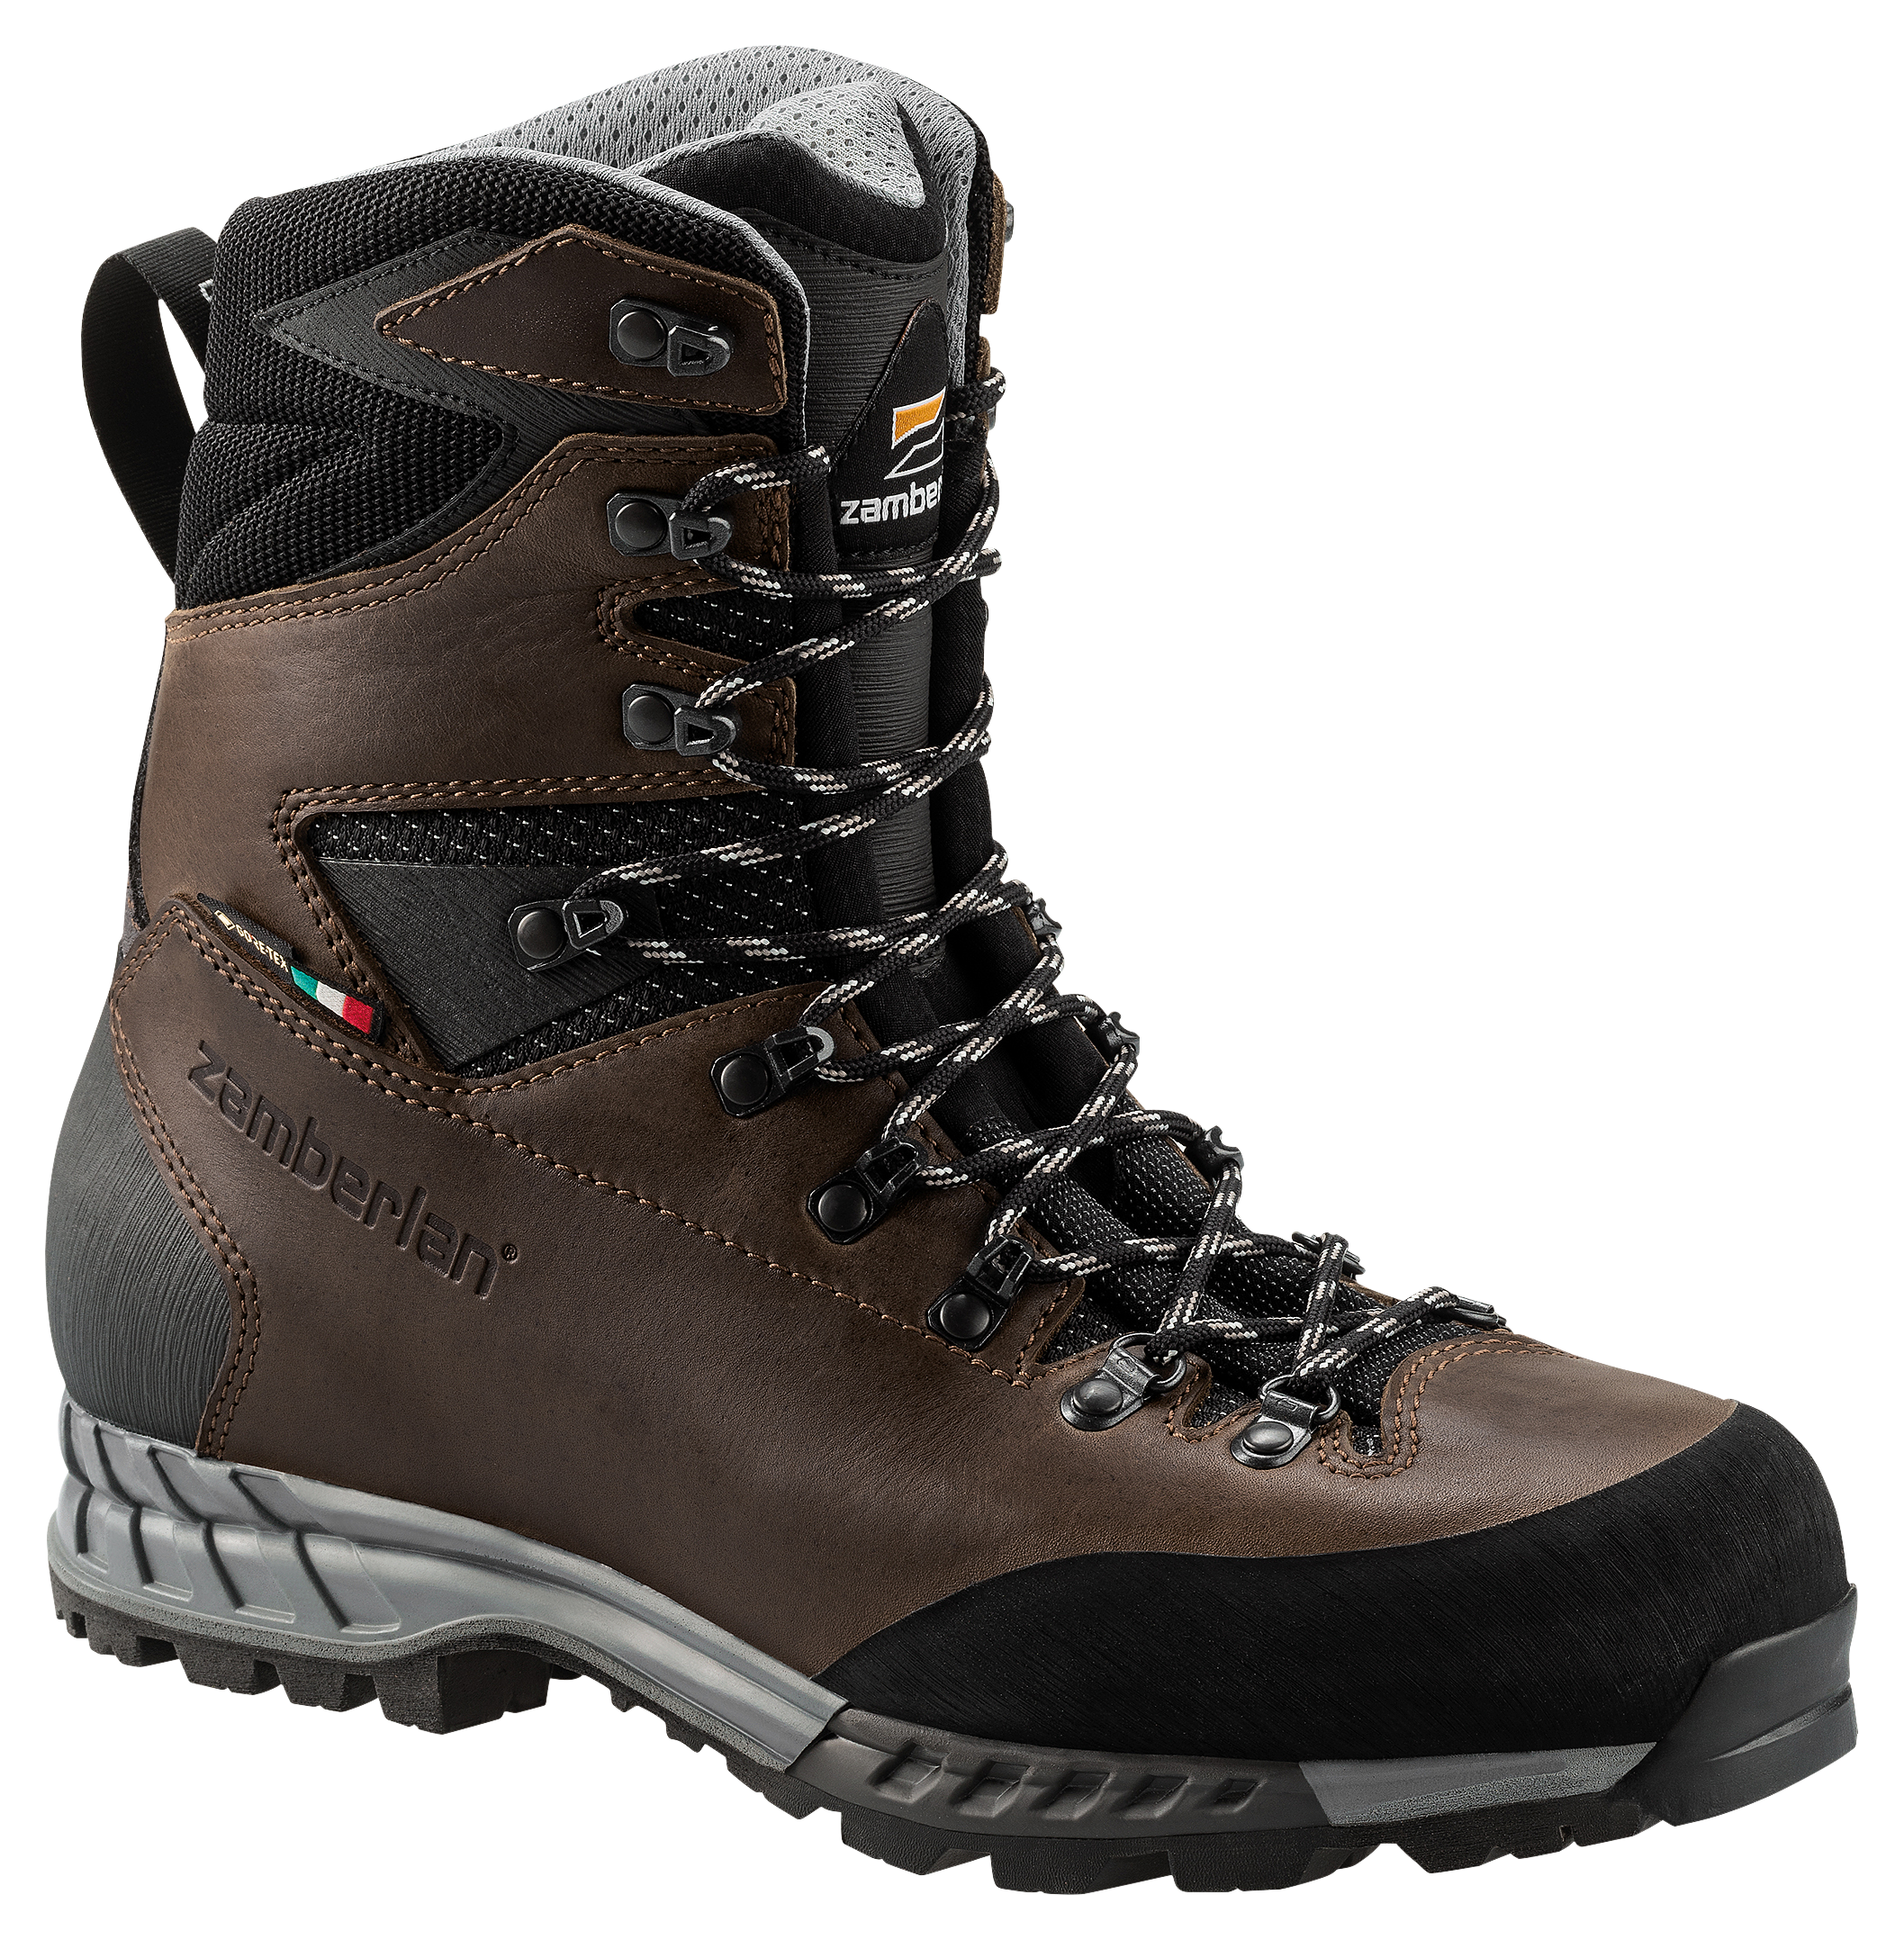 Zamberlan Cresta Alta GTX RR Hunting Boots for Men - Waxed Dark Brown - 10M